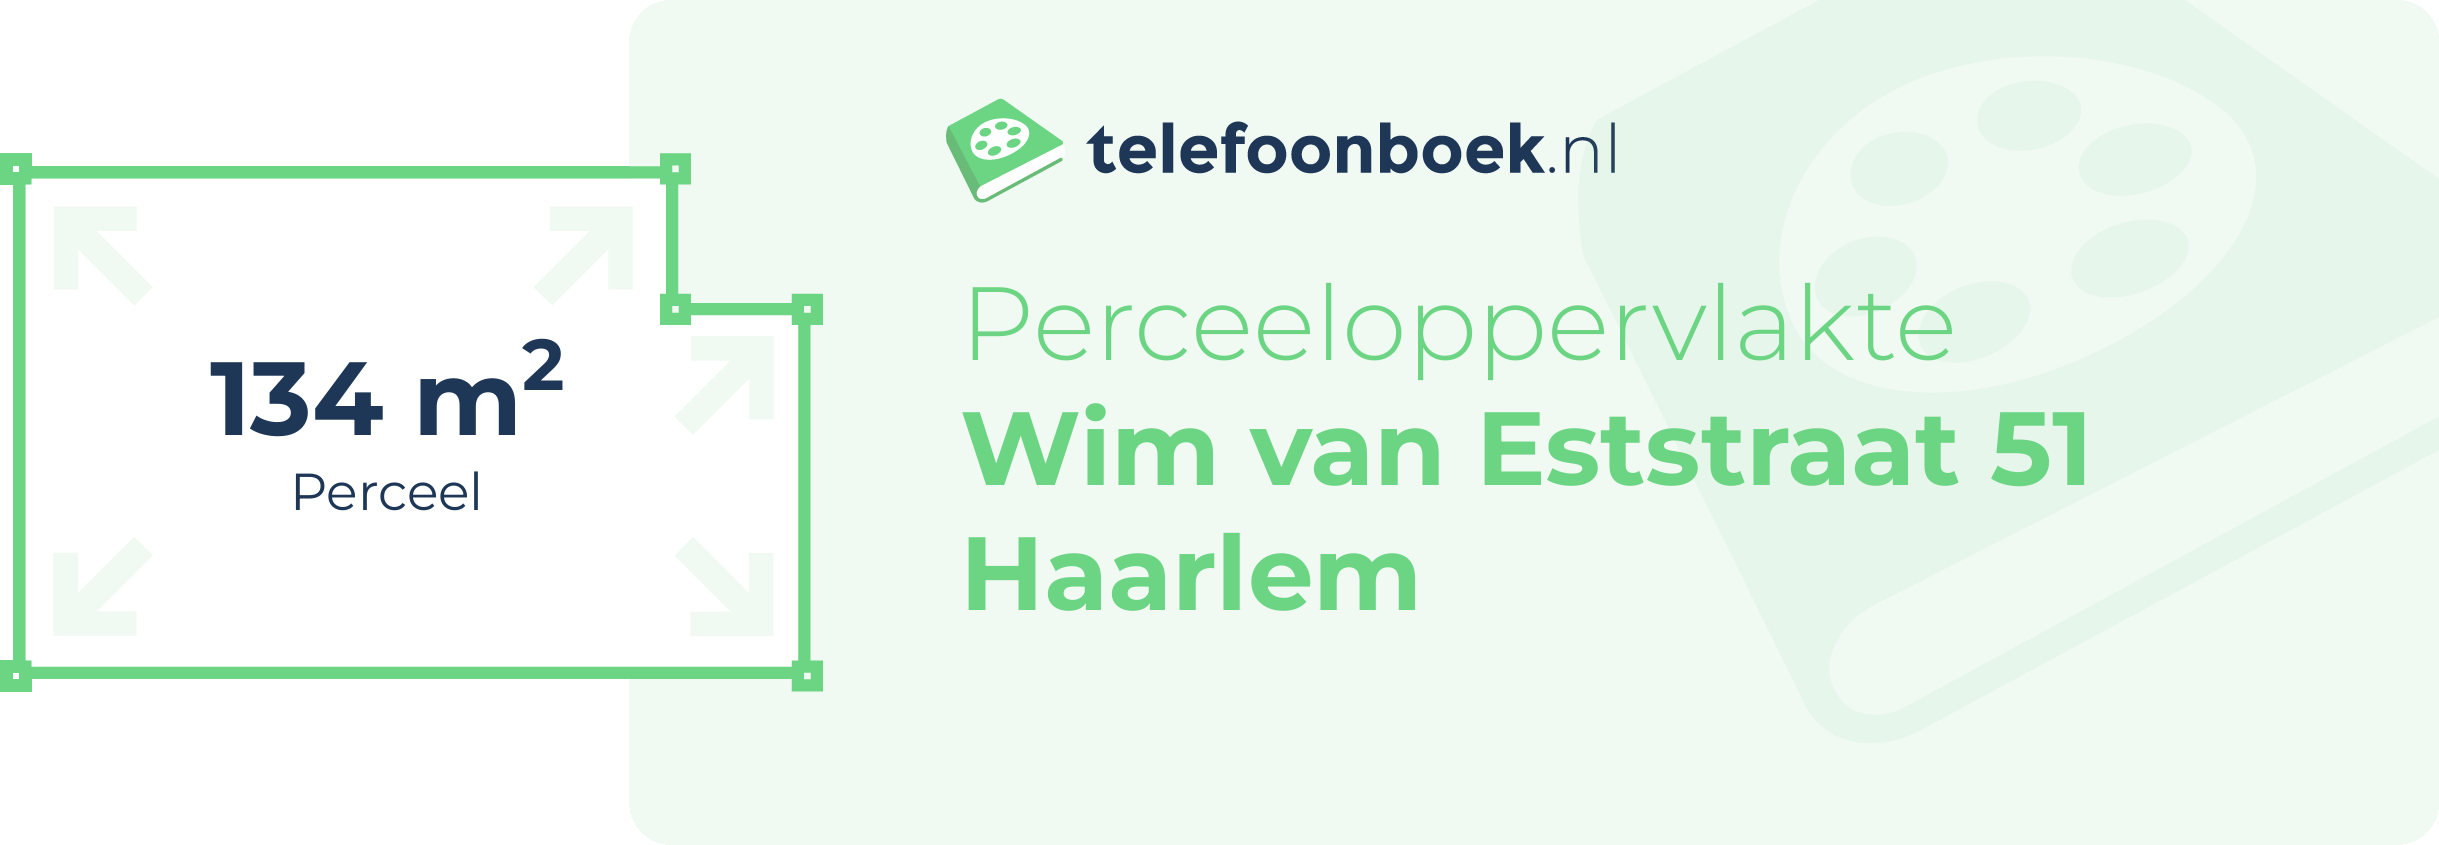 Perceeloppervlakte Wim Van Eststraat 51 Haarlem